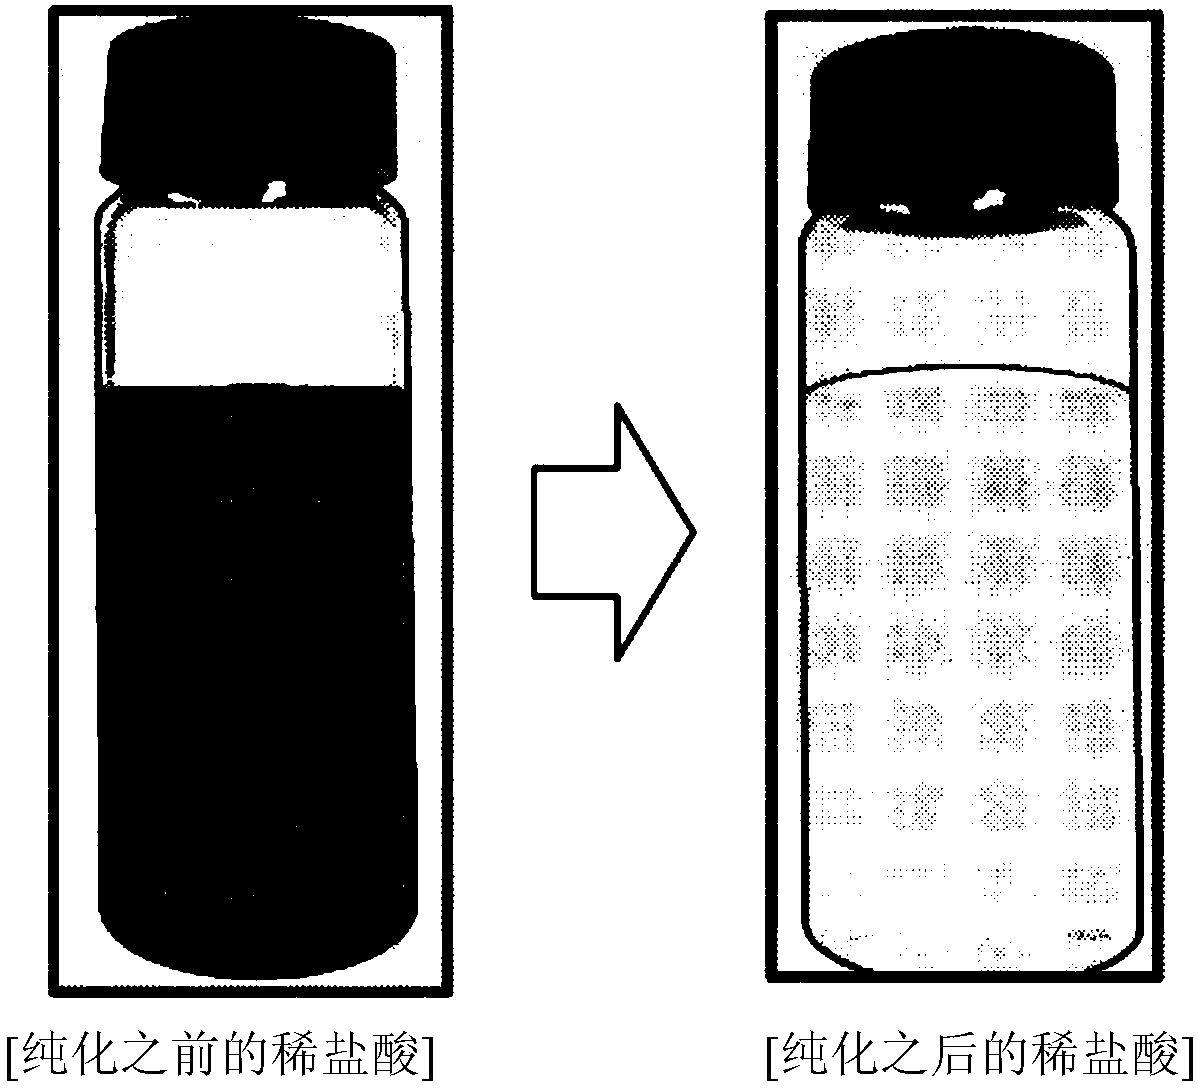 Method for purifying waste hydrochloric acid